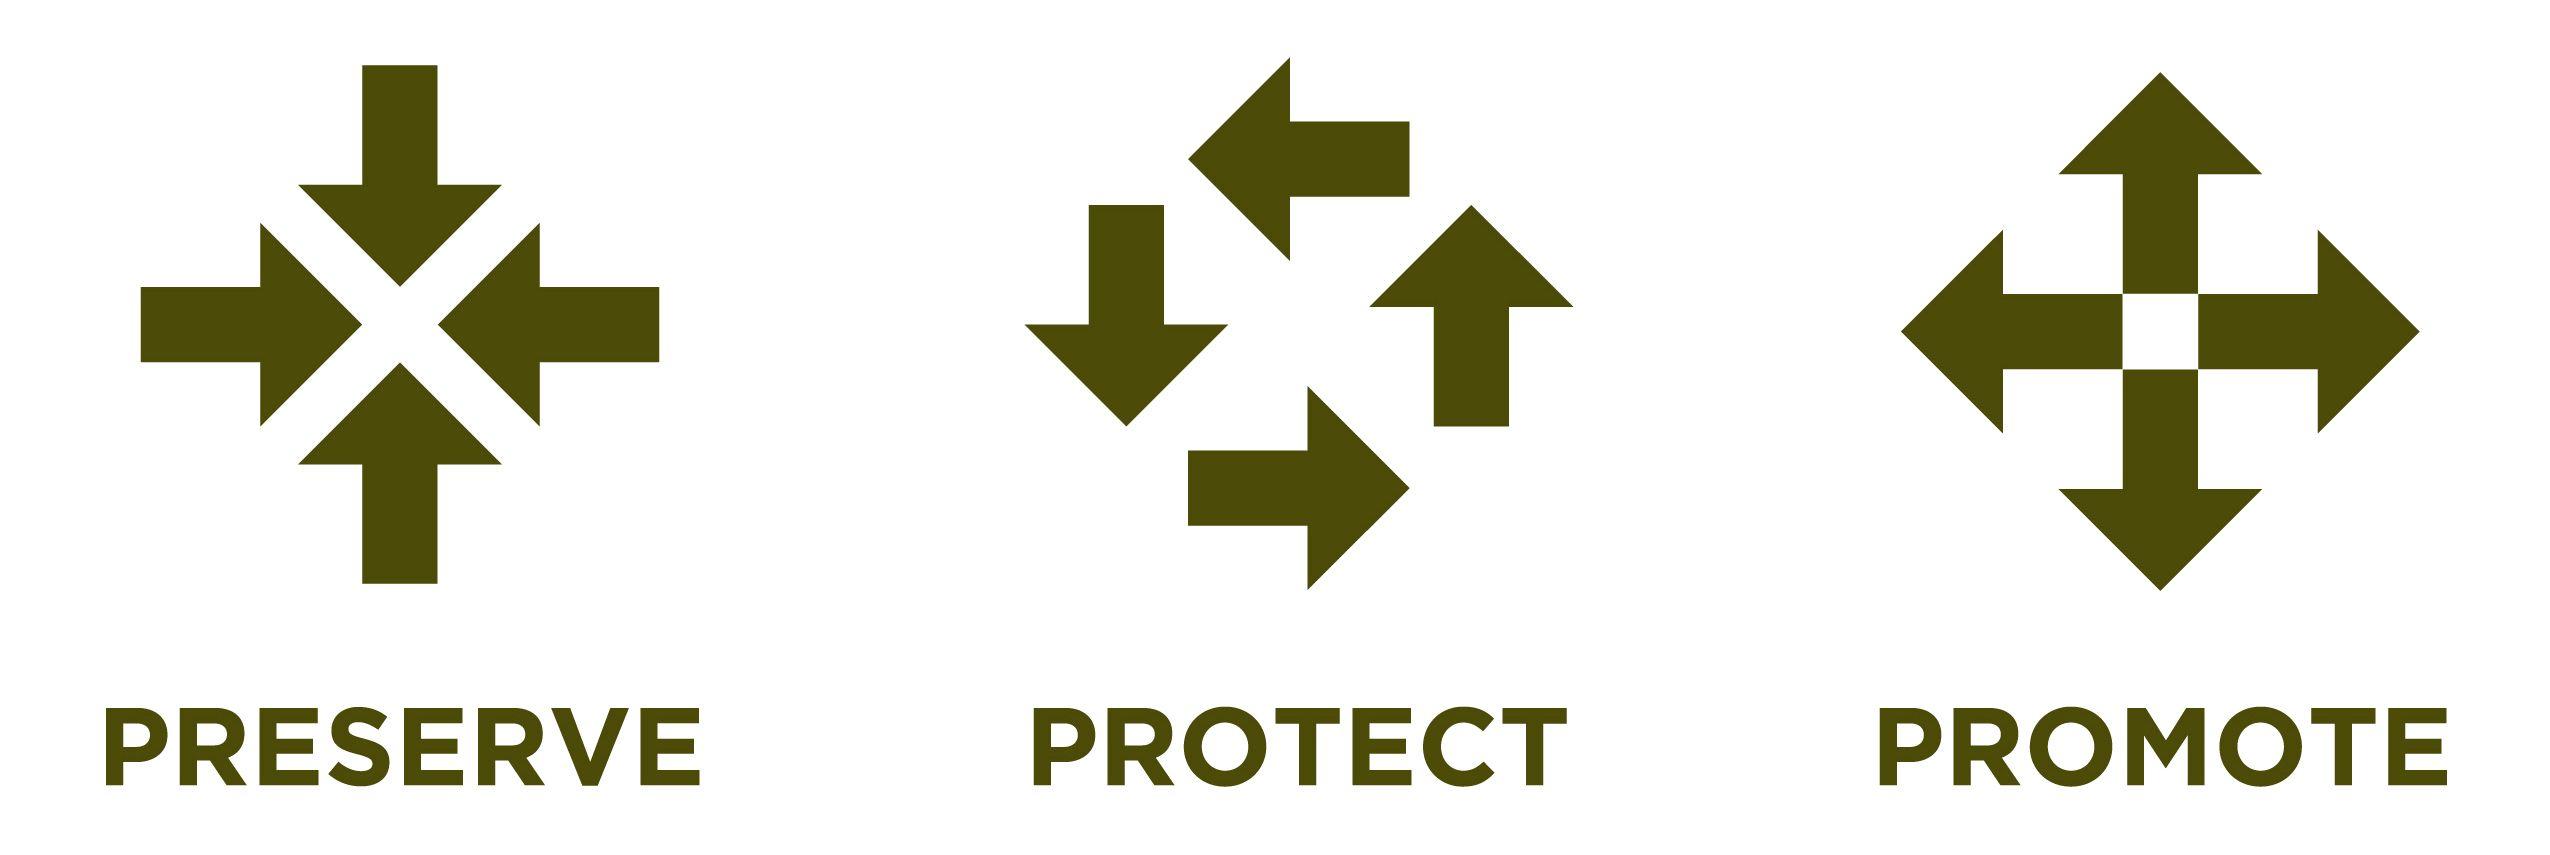 Preserve Logo - Minnesota Preservation graphic | Outreach | Preserves, Conservation ...